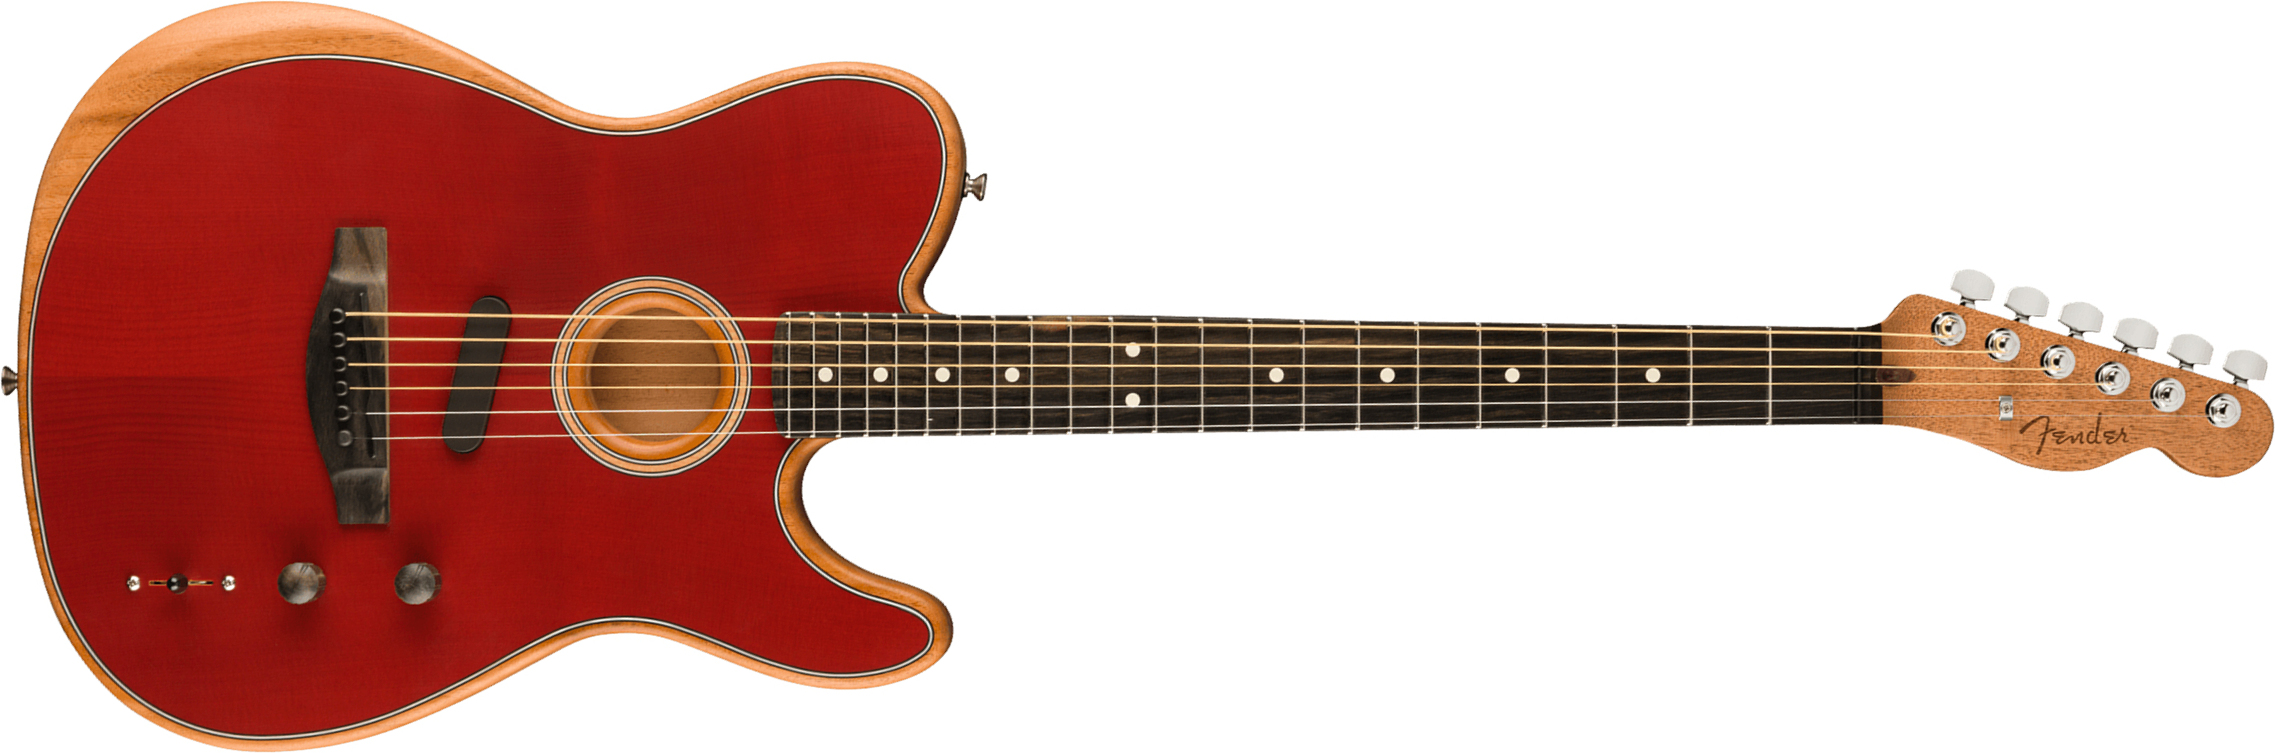 Fender Tele American Acoustasonic Usa Eb - Crimson Red - Electro acoustic guitar - Main picture